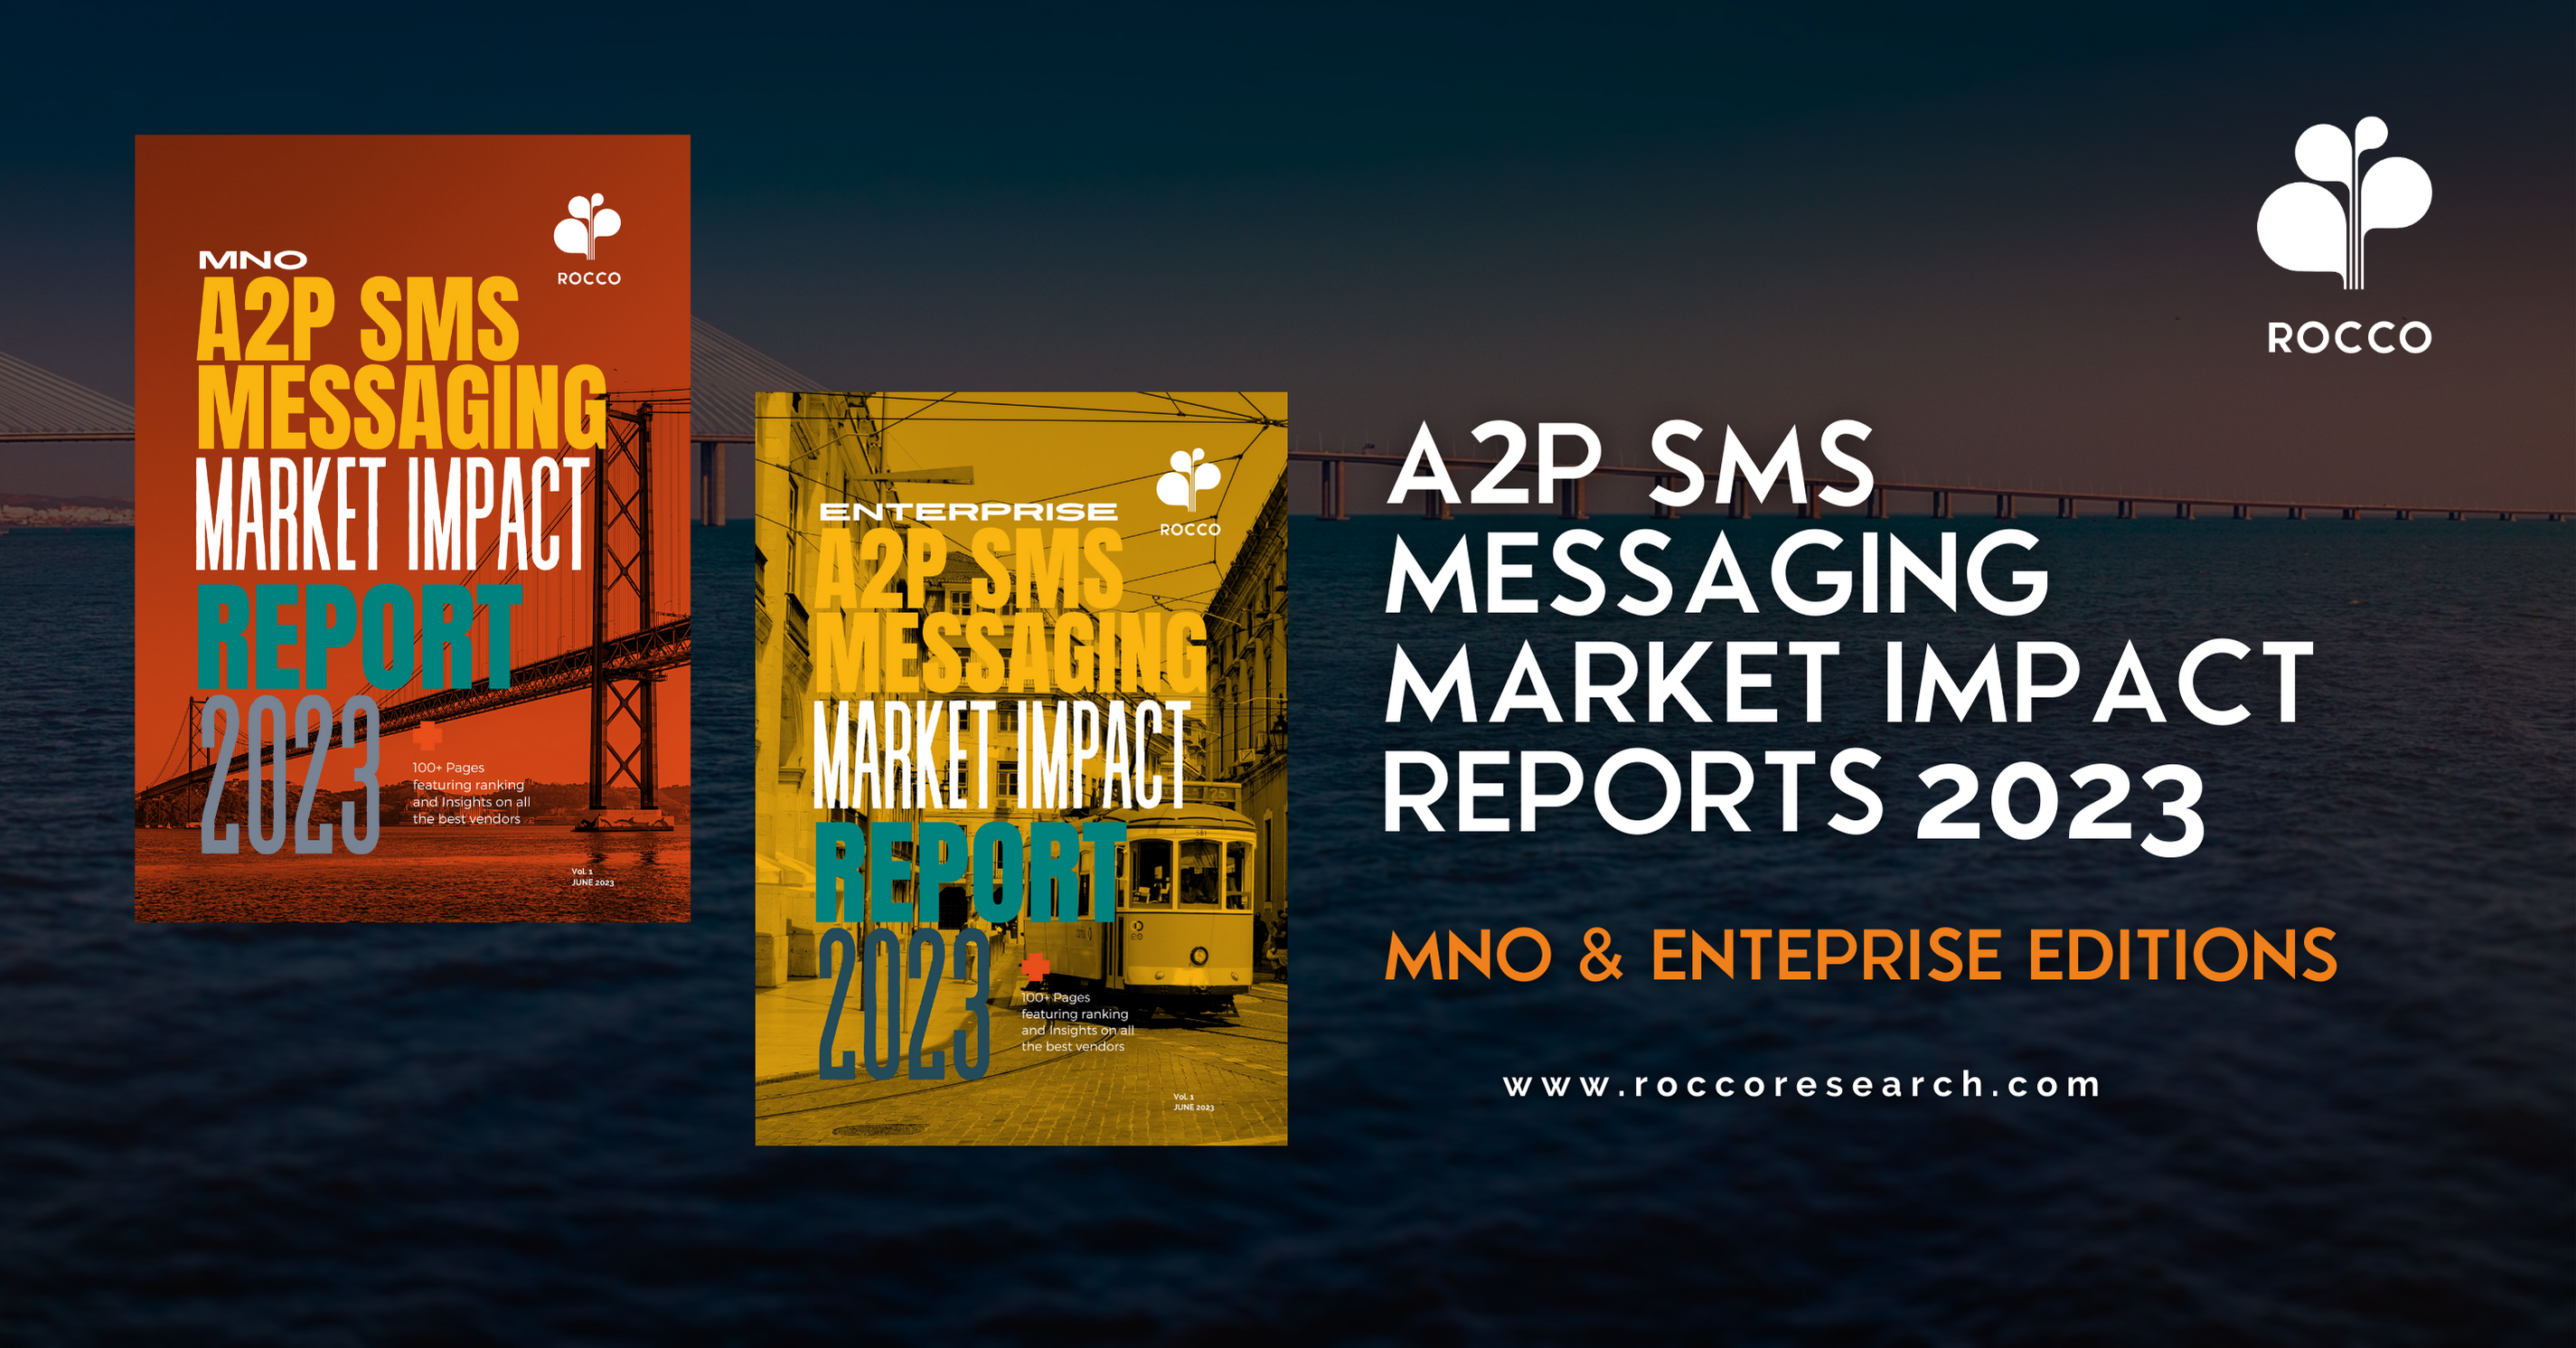 The Leading Vendors in A2P SMS (MNO & Enterprise) are announced!